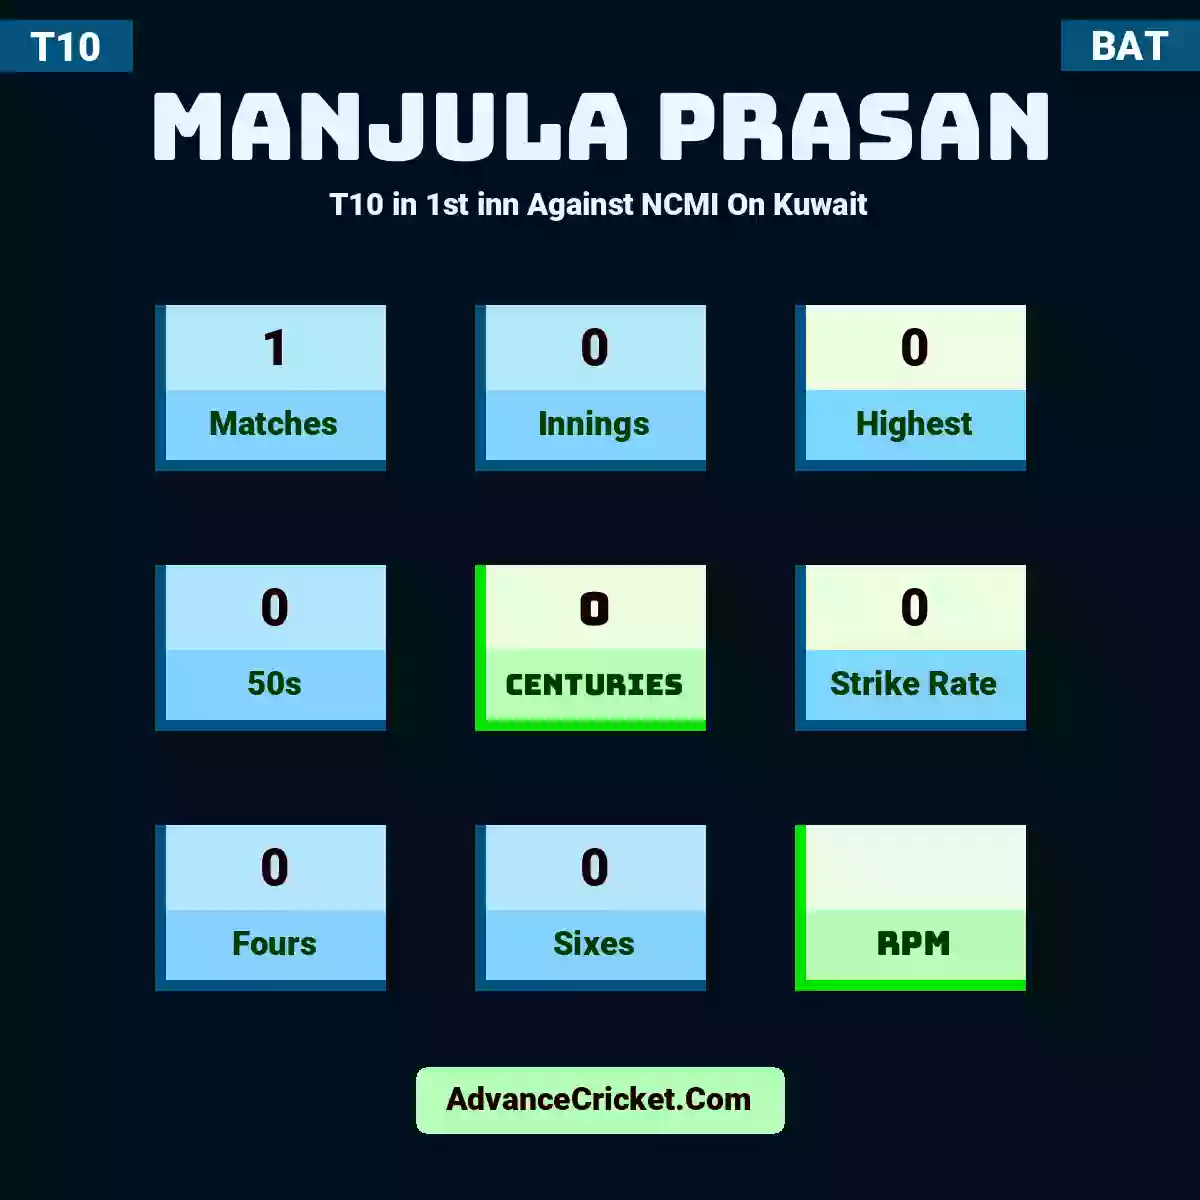 Manjula Prasan T10  in 1st inn Against NCMI On Kuwait, Manjula Prasan played 1 matches, scored 0 runs as highest, 0 half-centuries, and 0 centuries, with a strike rate of 0. M.Prasan hit 0 fours and 0 sixes.